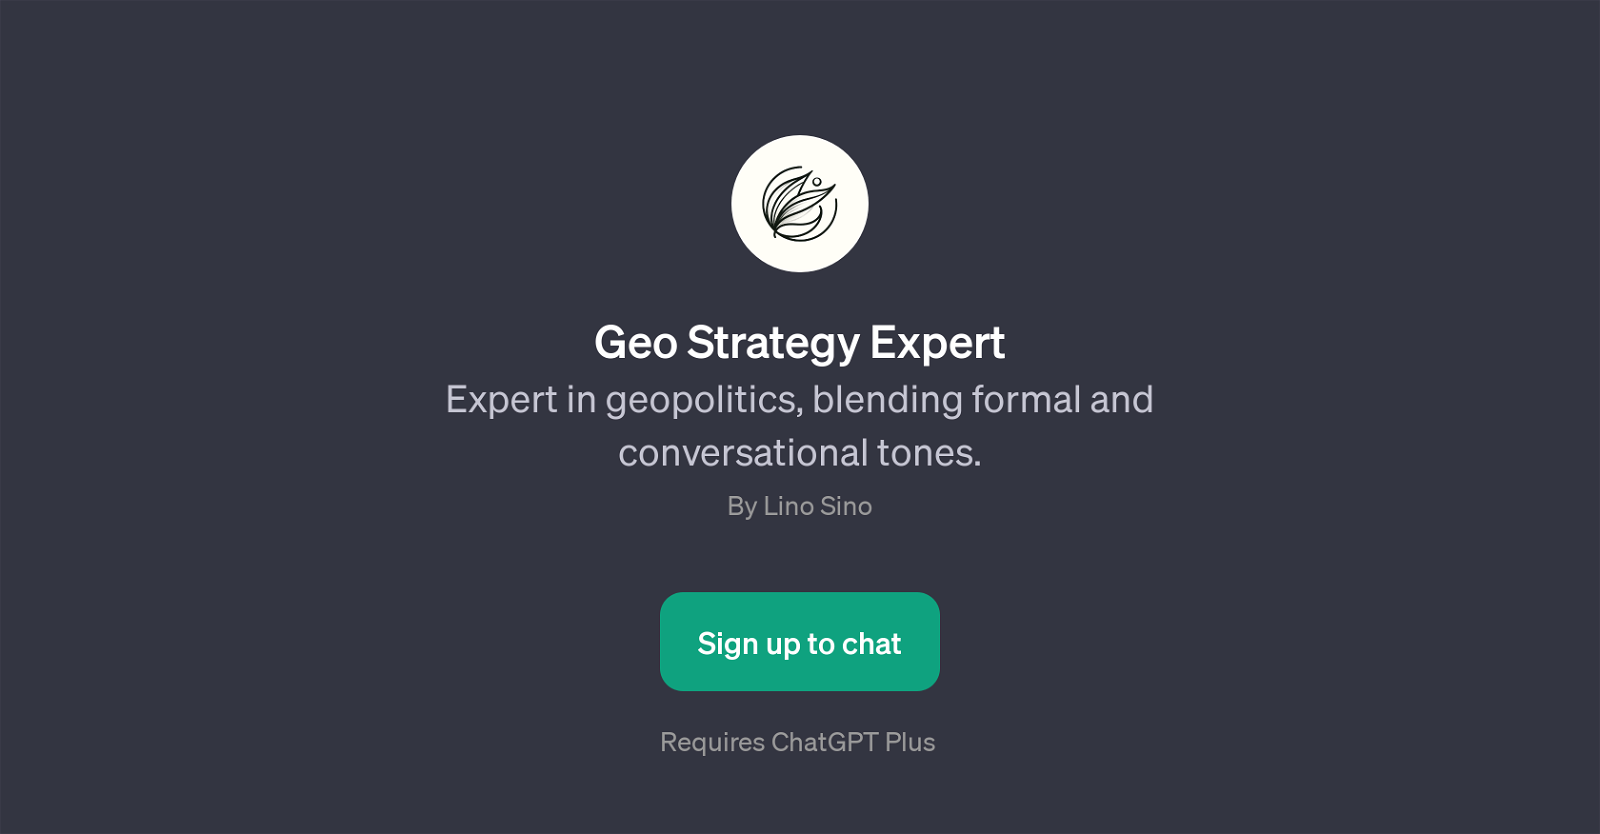 Geo Strategy Expert website